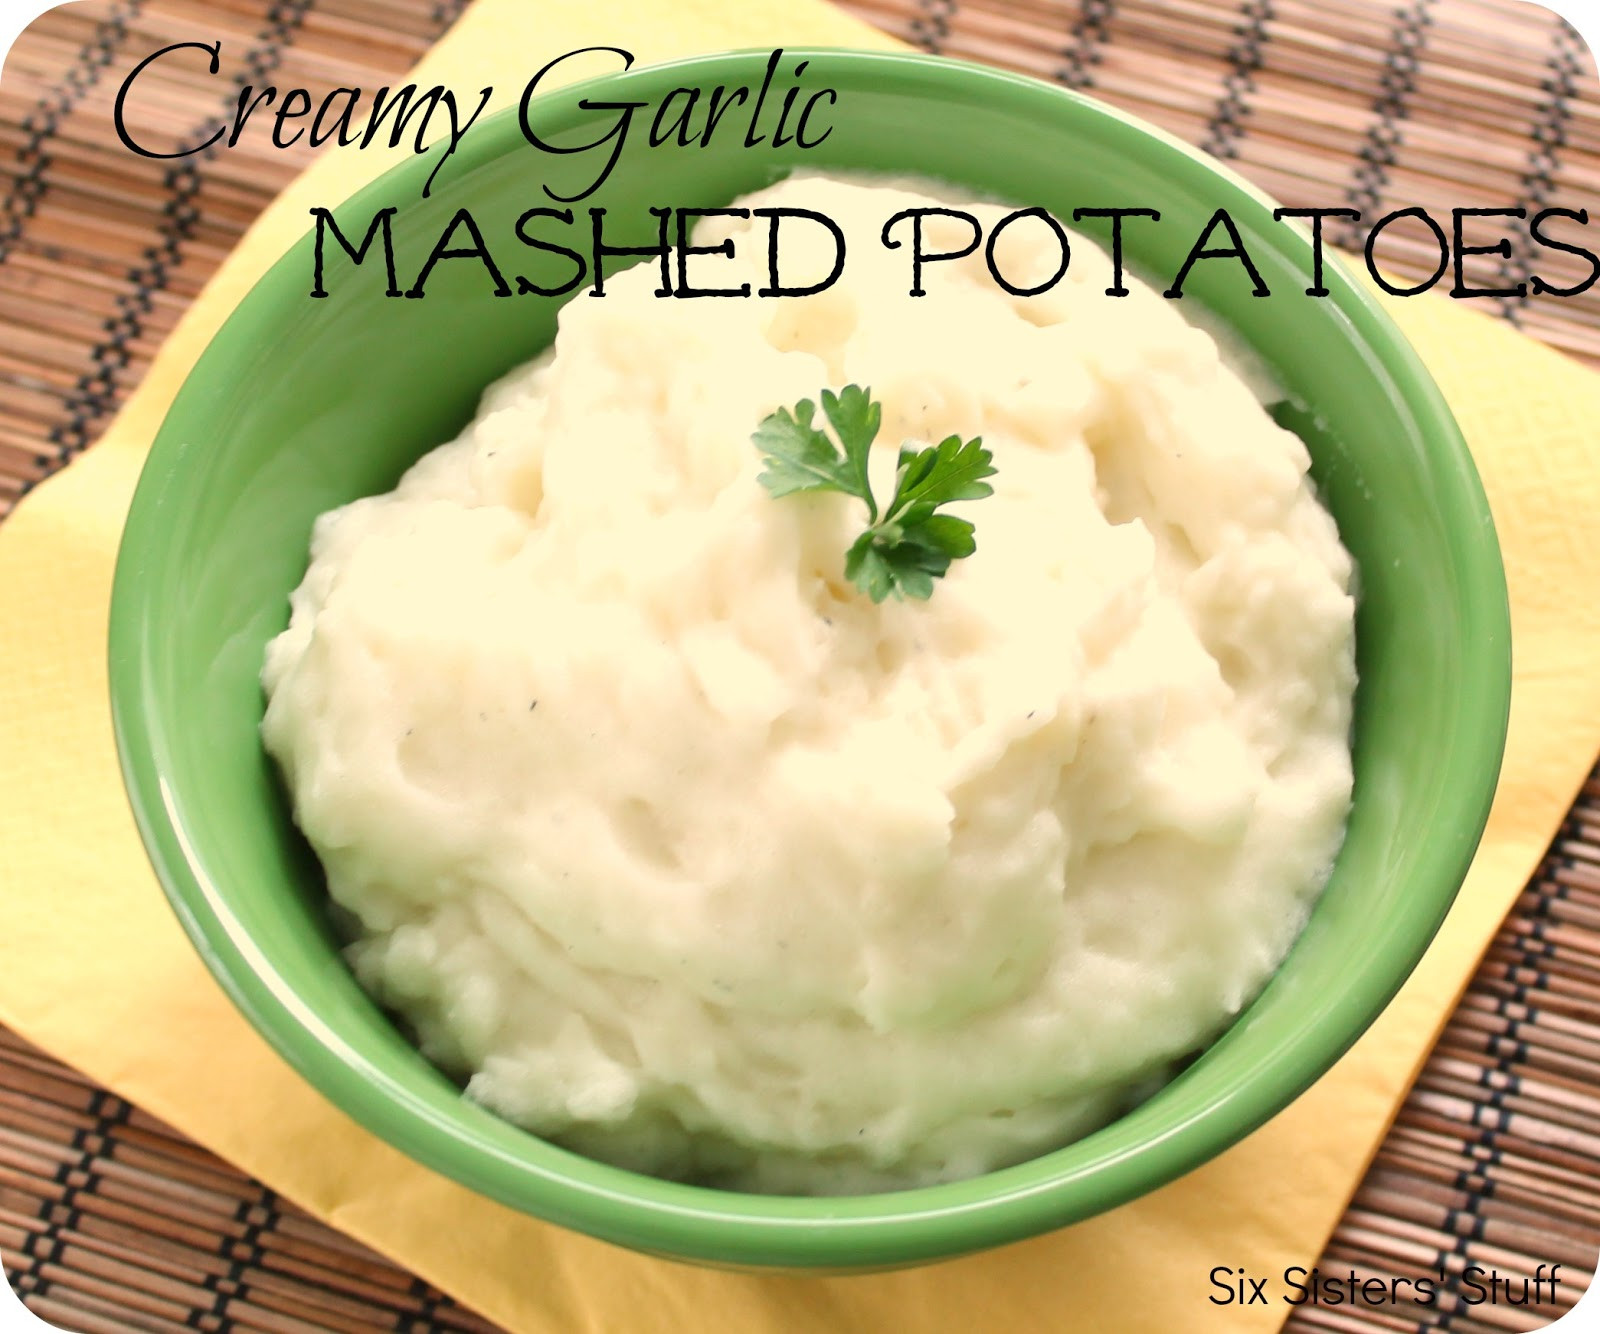 Creamy Garlic Mashed Potatoes Recipe
 Creamy Garlic Mashed Potatoes